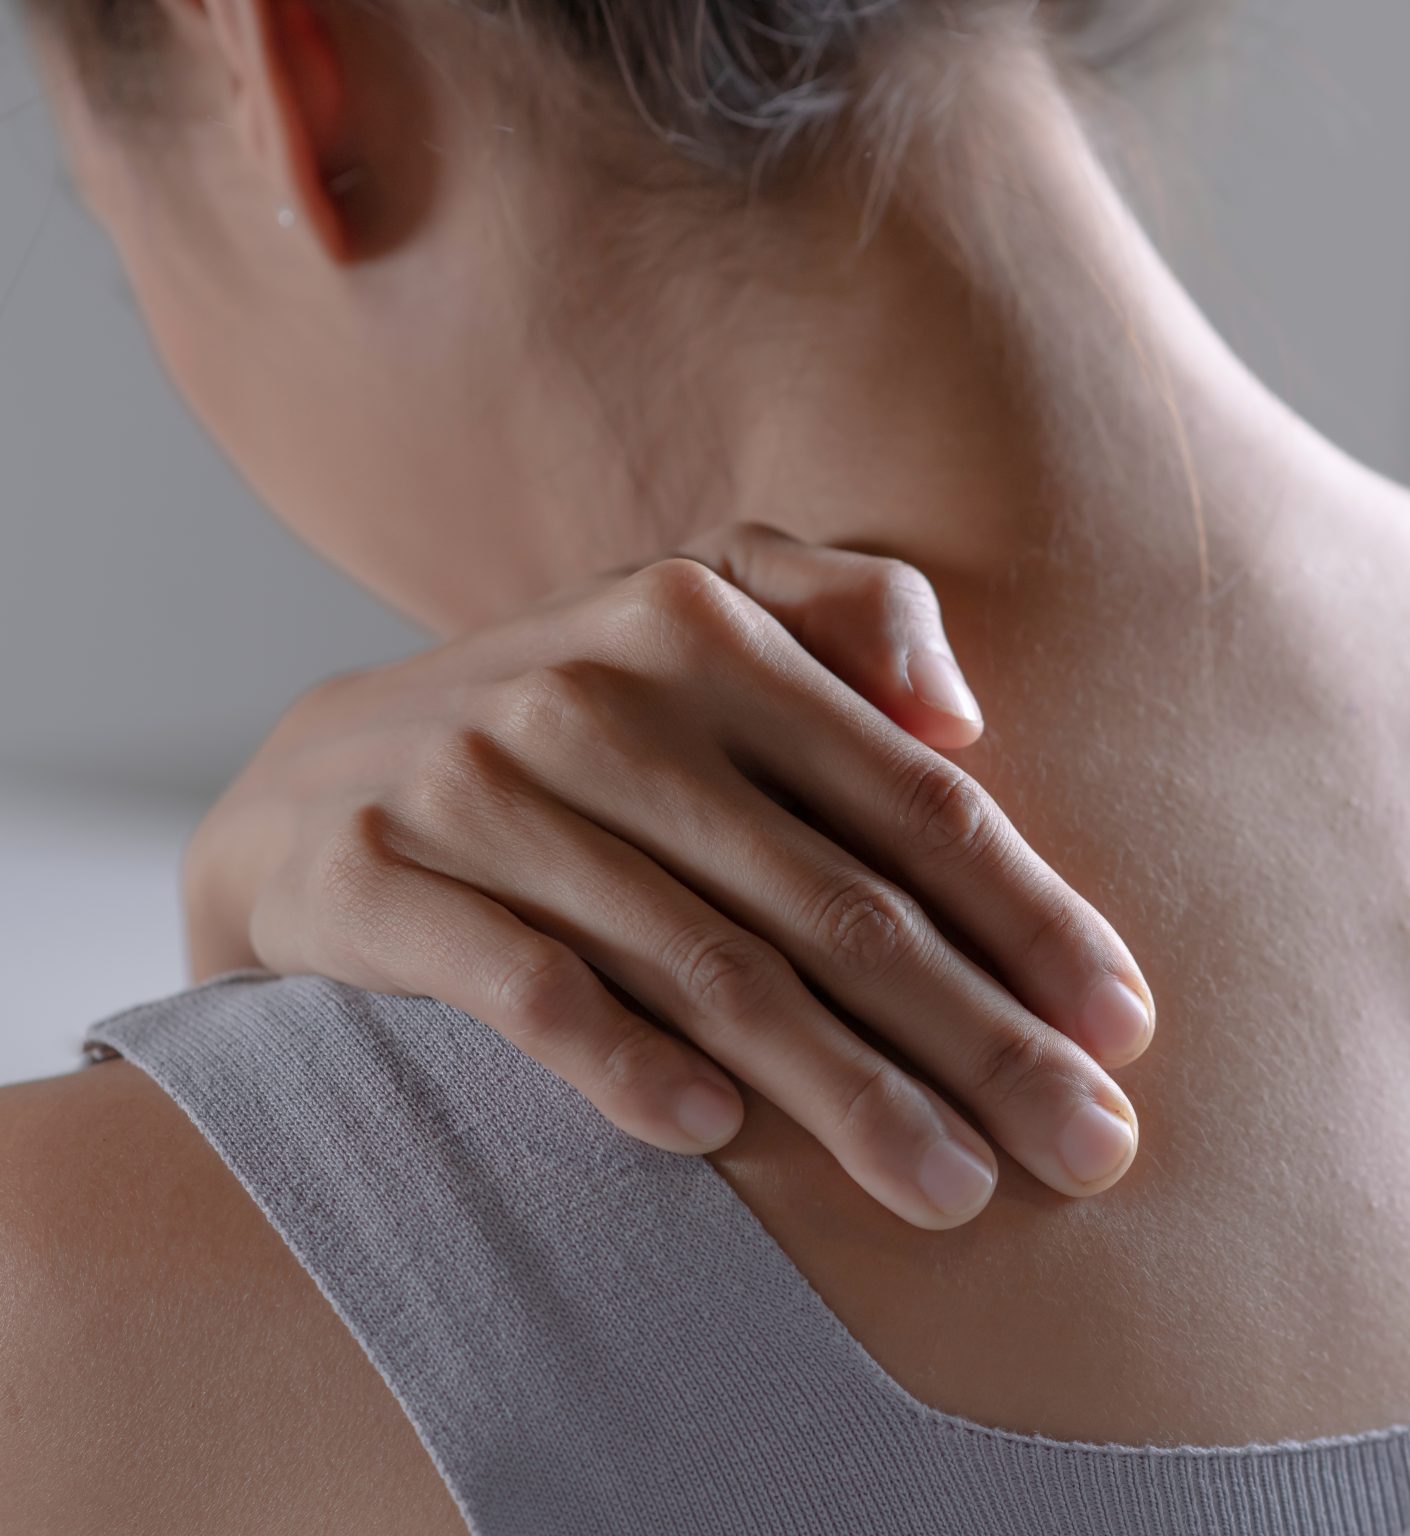 woman has shoulder pain 2022 06 07 17 45 08 utc 1